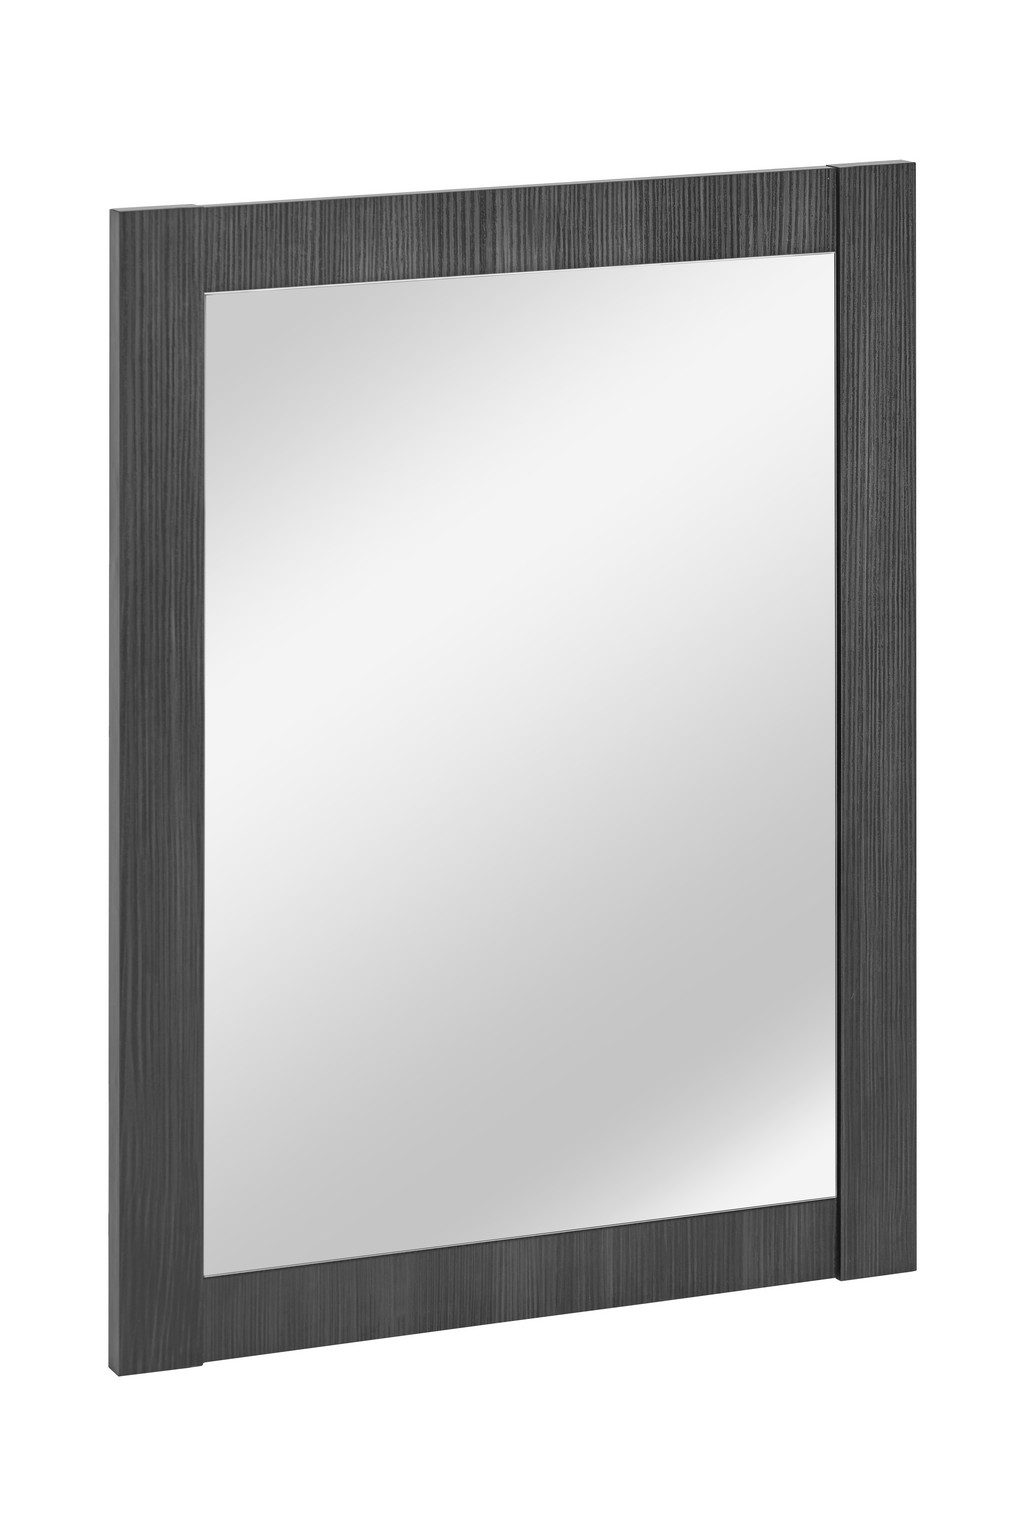 commad - Classic 840 Grafit zrkadlo